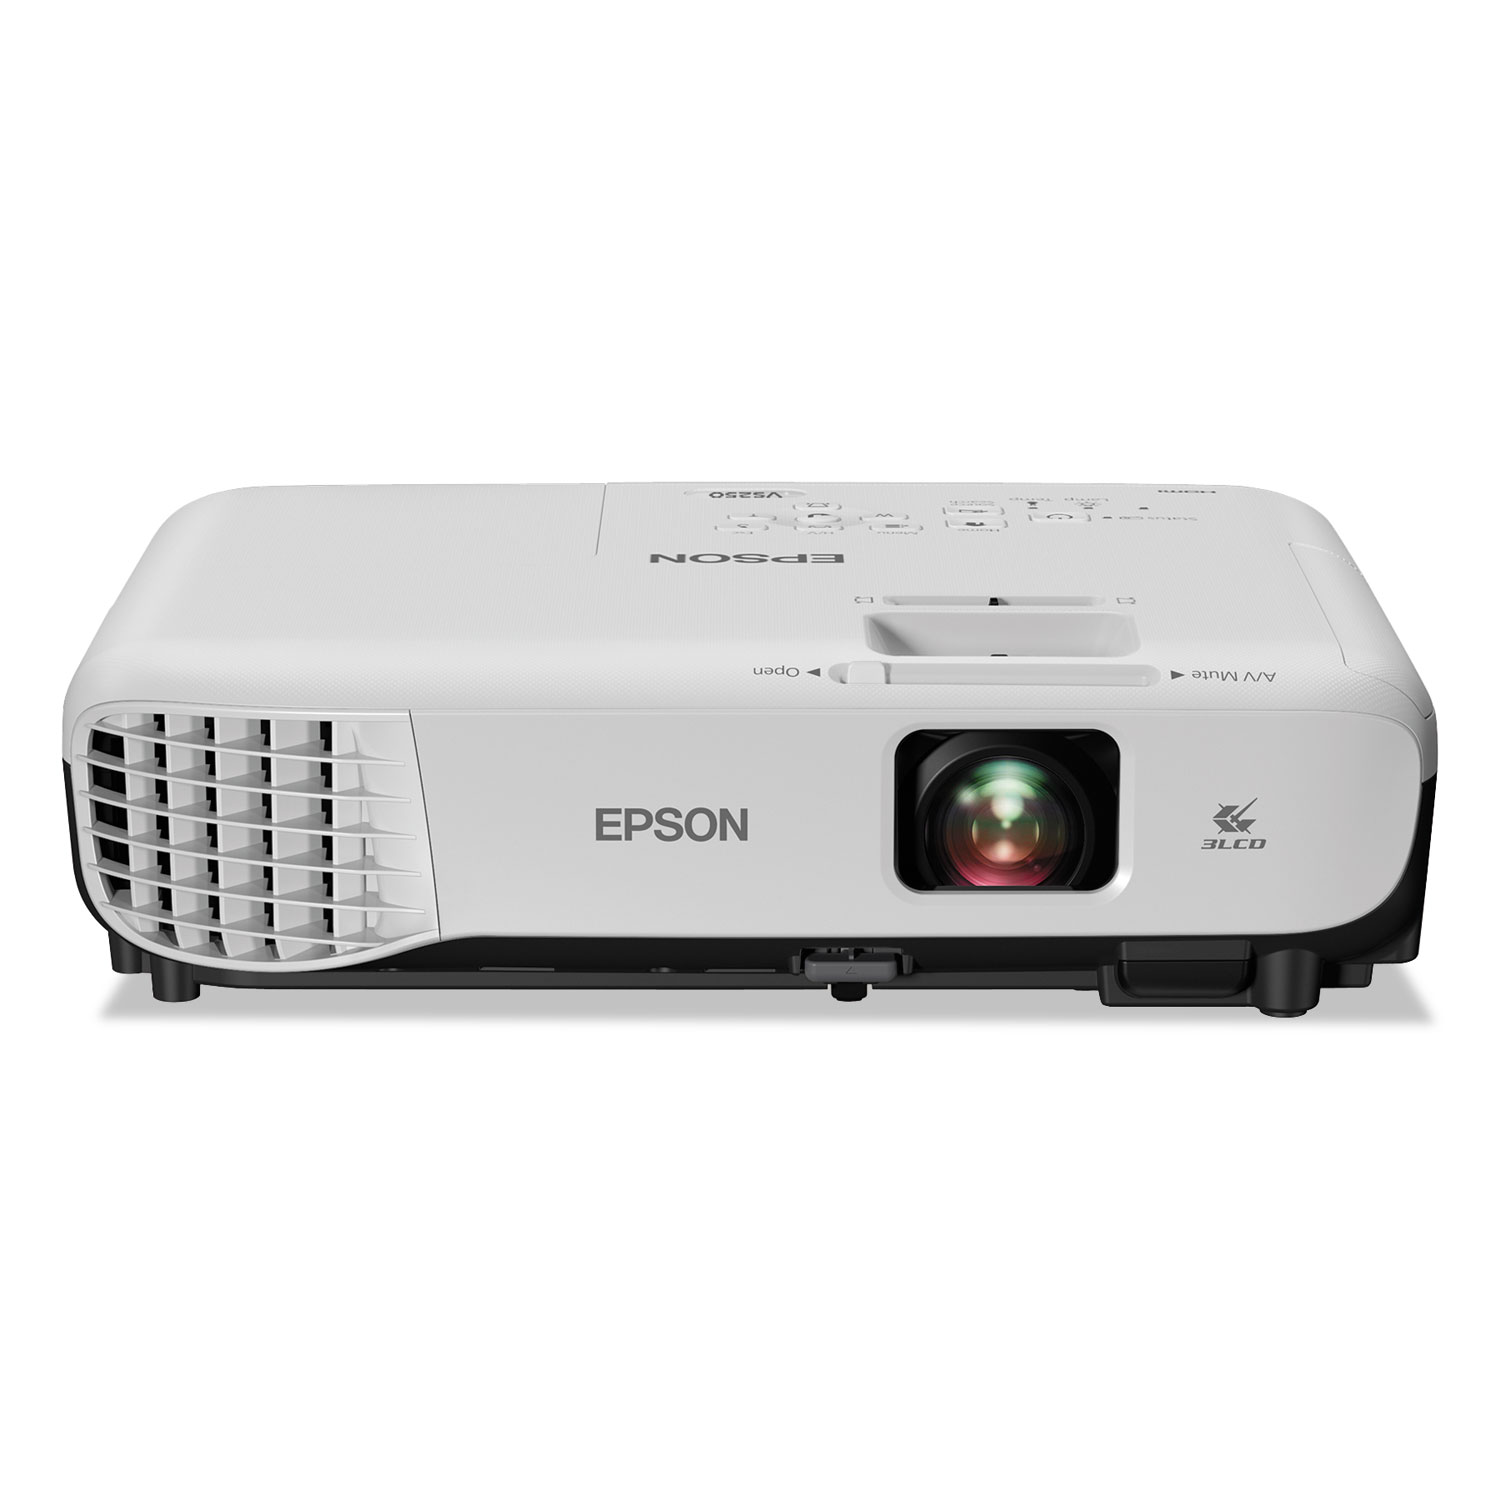  Epson V11H838220 VS250 SVGA 3LCD Projector, 3,200 lm, 800 x 600 Pixels, 1.35x Zoom (EPSV11H838220) 